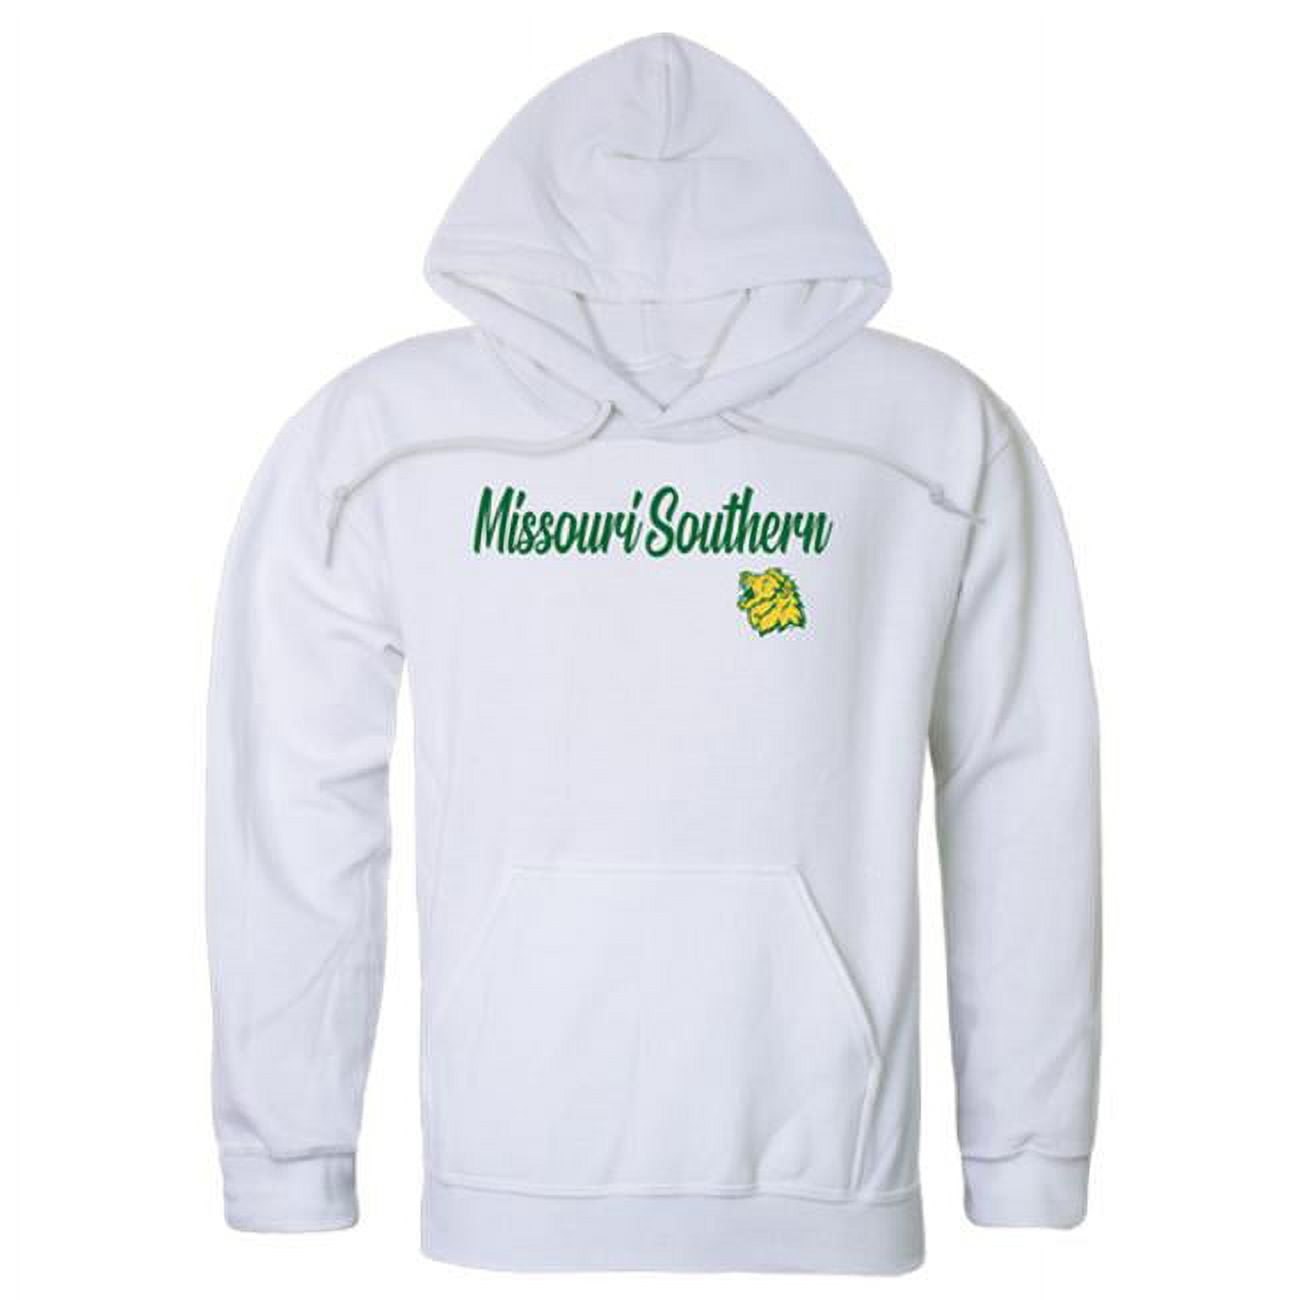 Missouri Southern Black Felt Letters Sweatshirt